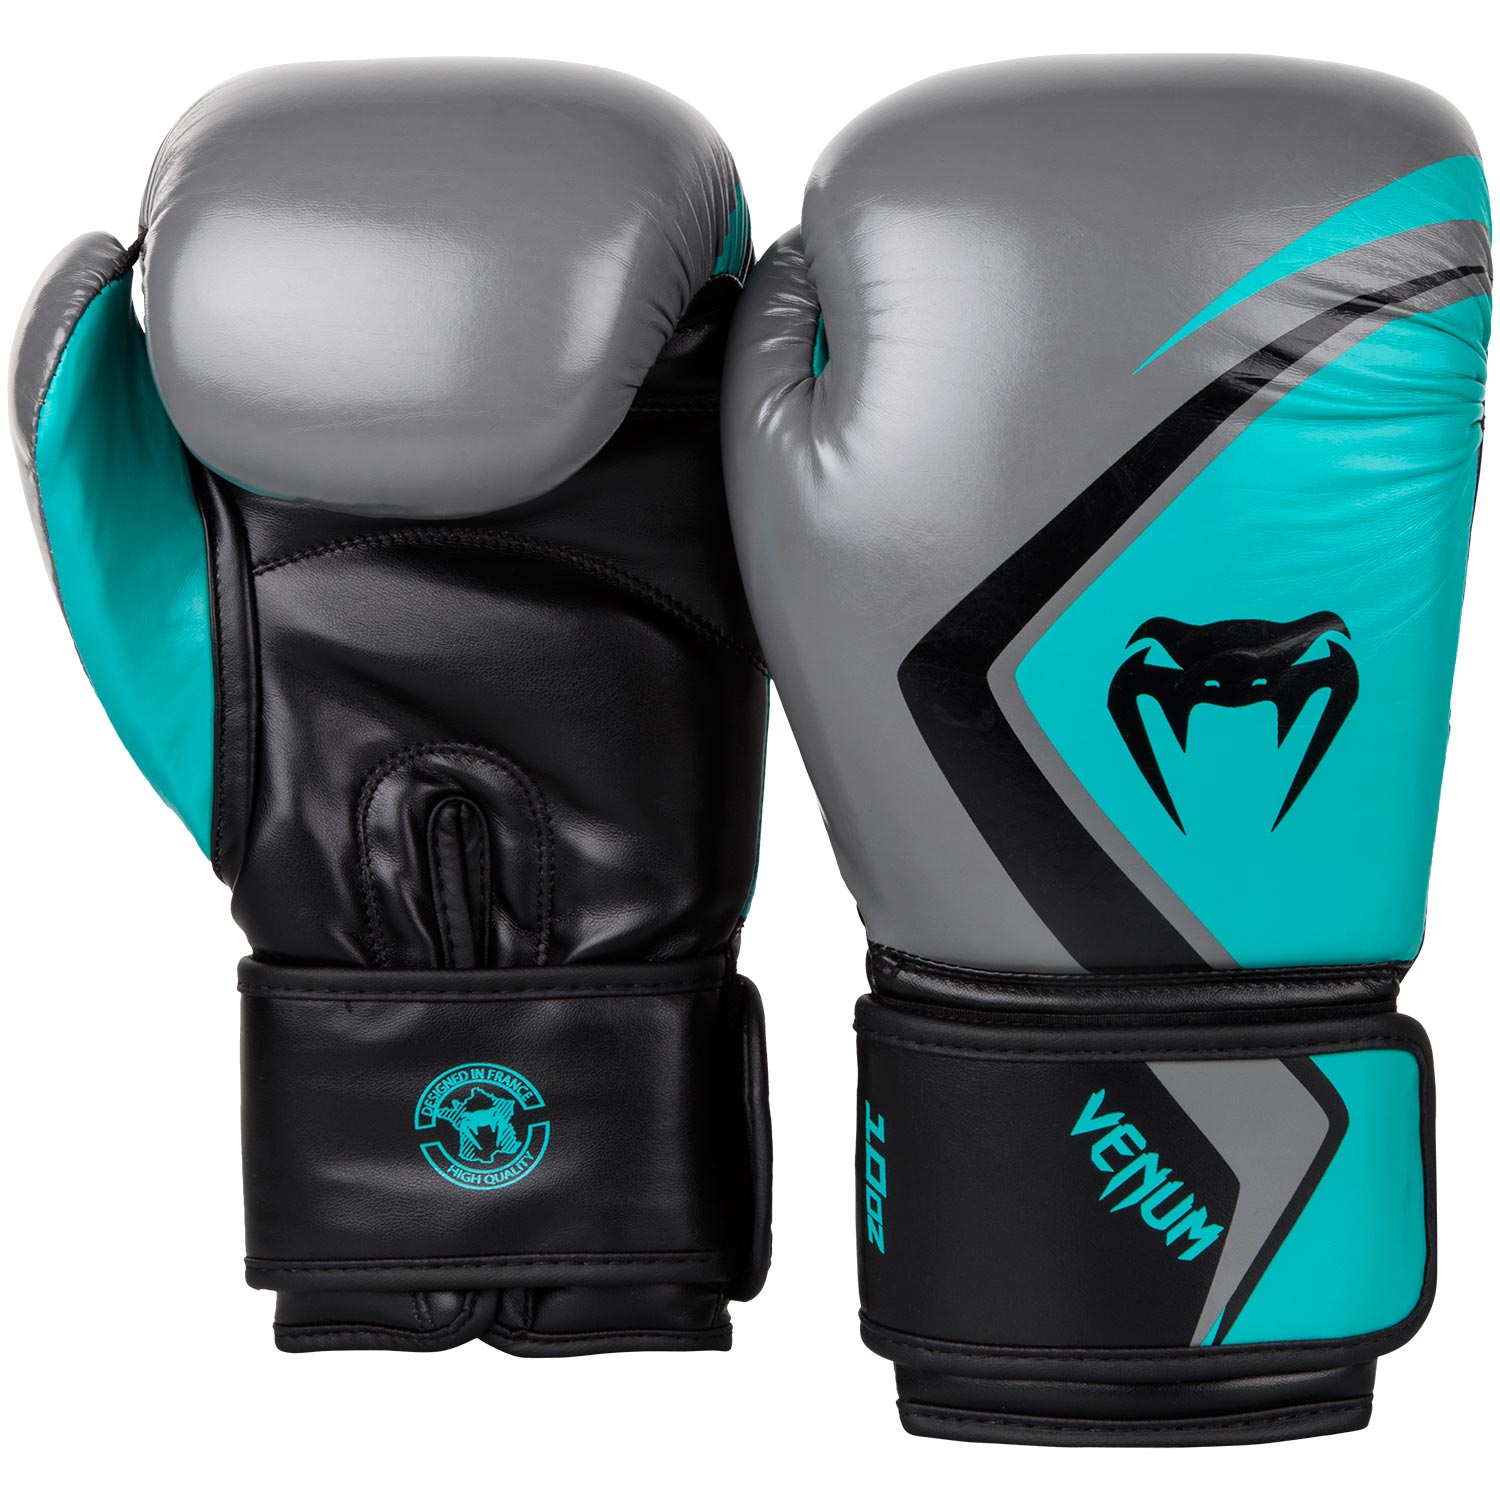 Боксерские перчатки спортмастер. Venum contender 2.0 перчатки. Боксерские перчатки Venum contender Black. Боксерские перчатки Venum 16 oz. Боксерские перчатки Venum contender 14.